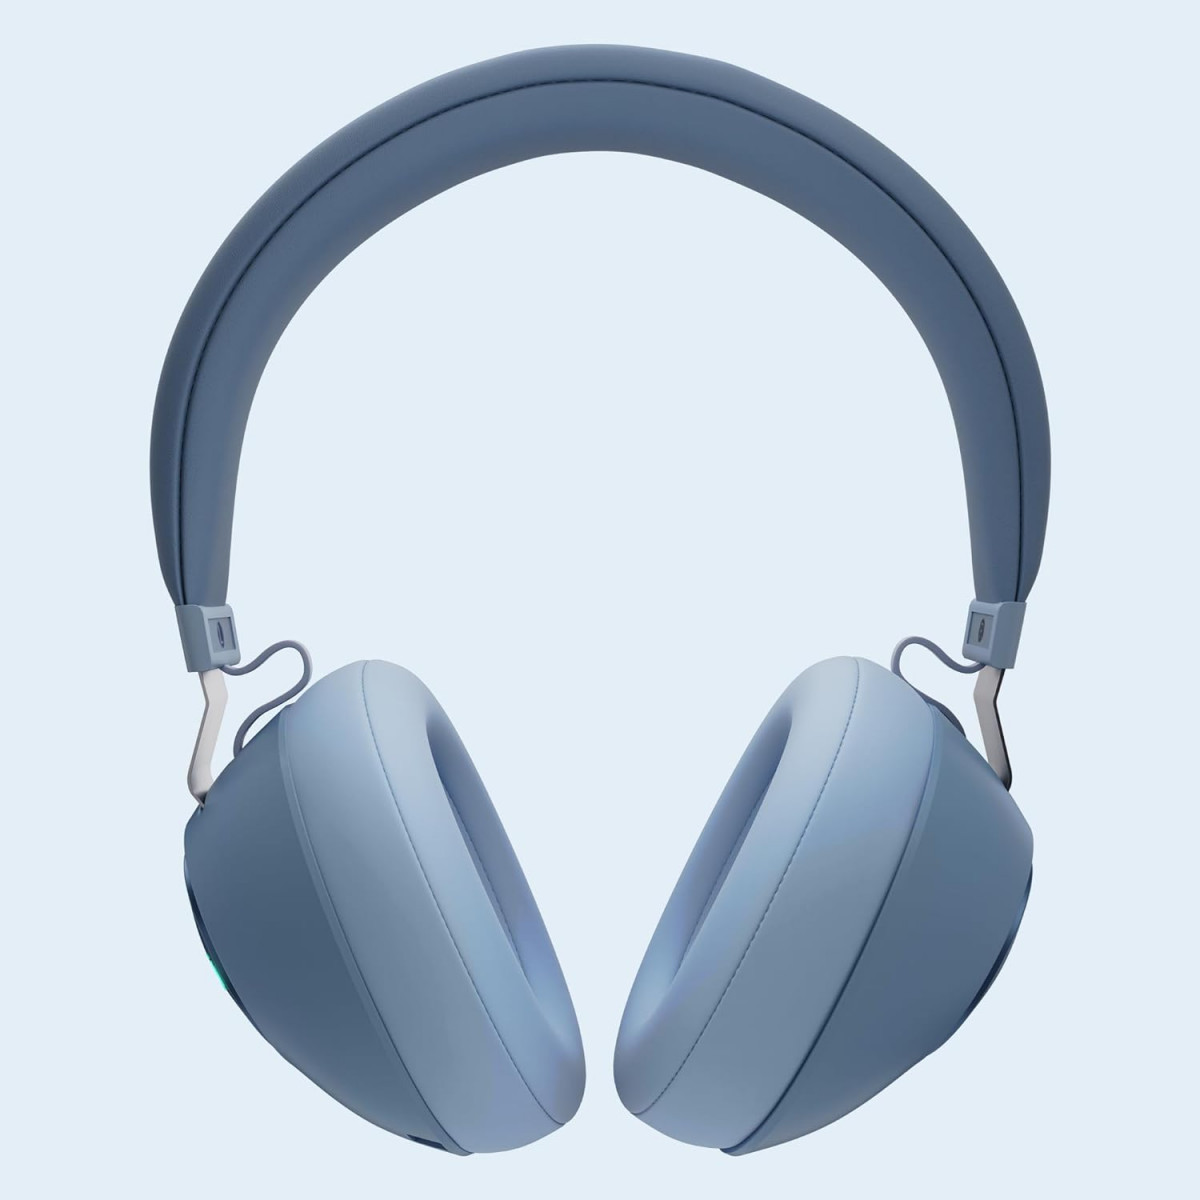 ZEBRONICS Duke 60hrs Playback Bluetooth Wireless Over Ear Headphone with Mic Blue